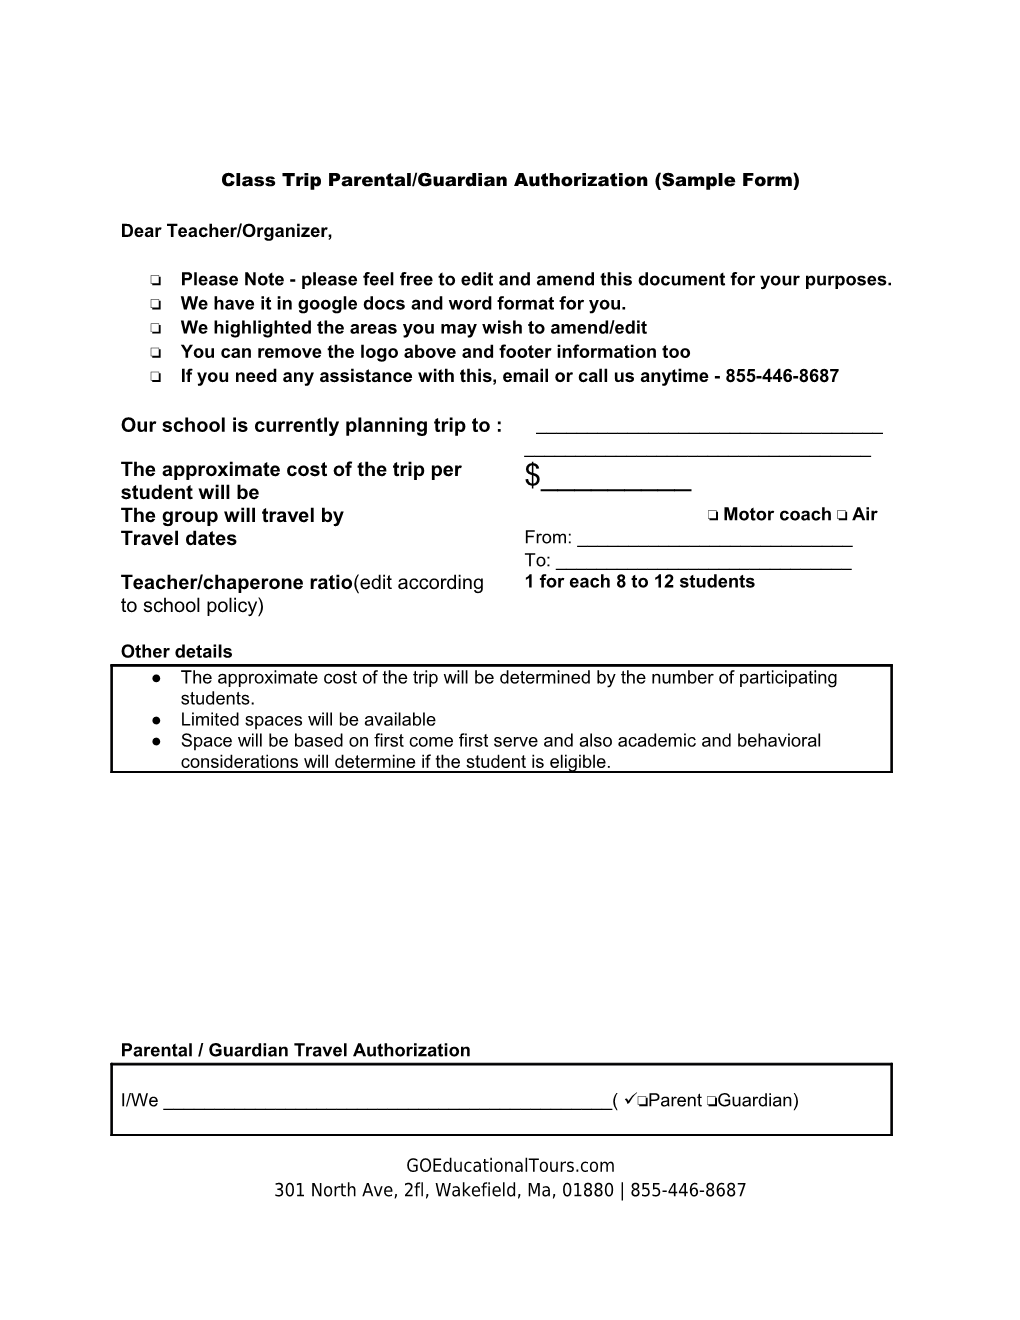 Class Trip Parental/Guardian Authorization (Sample Form)